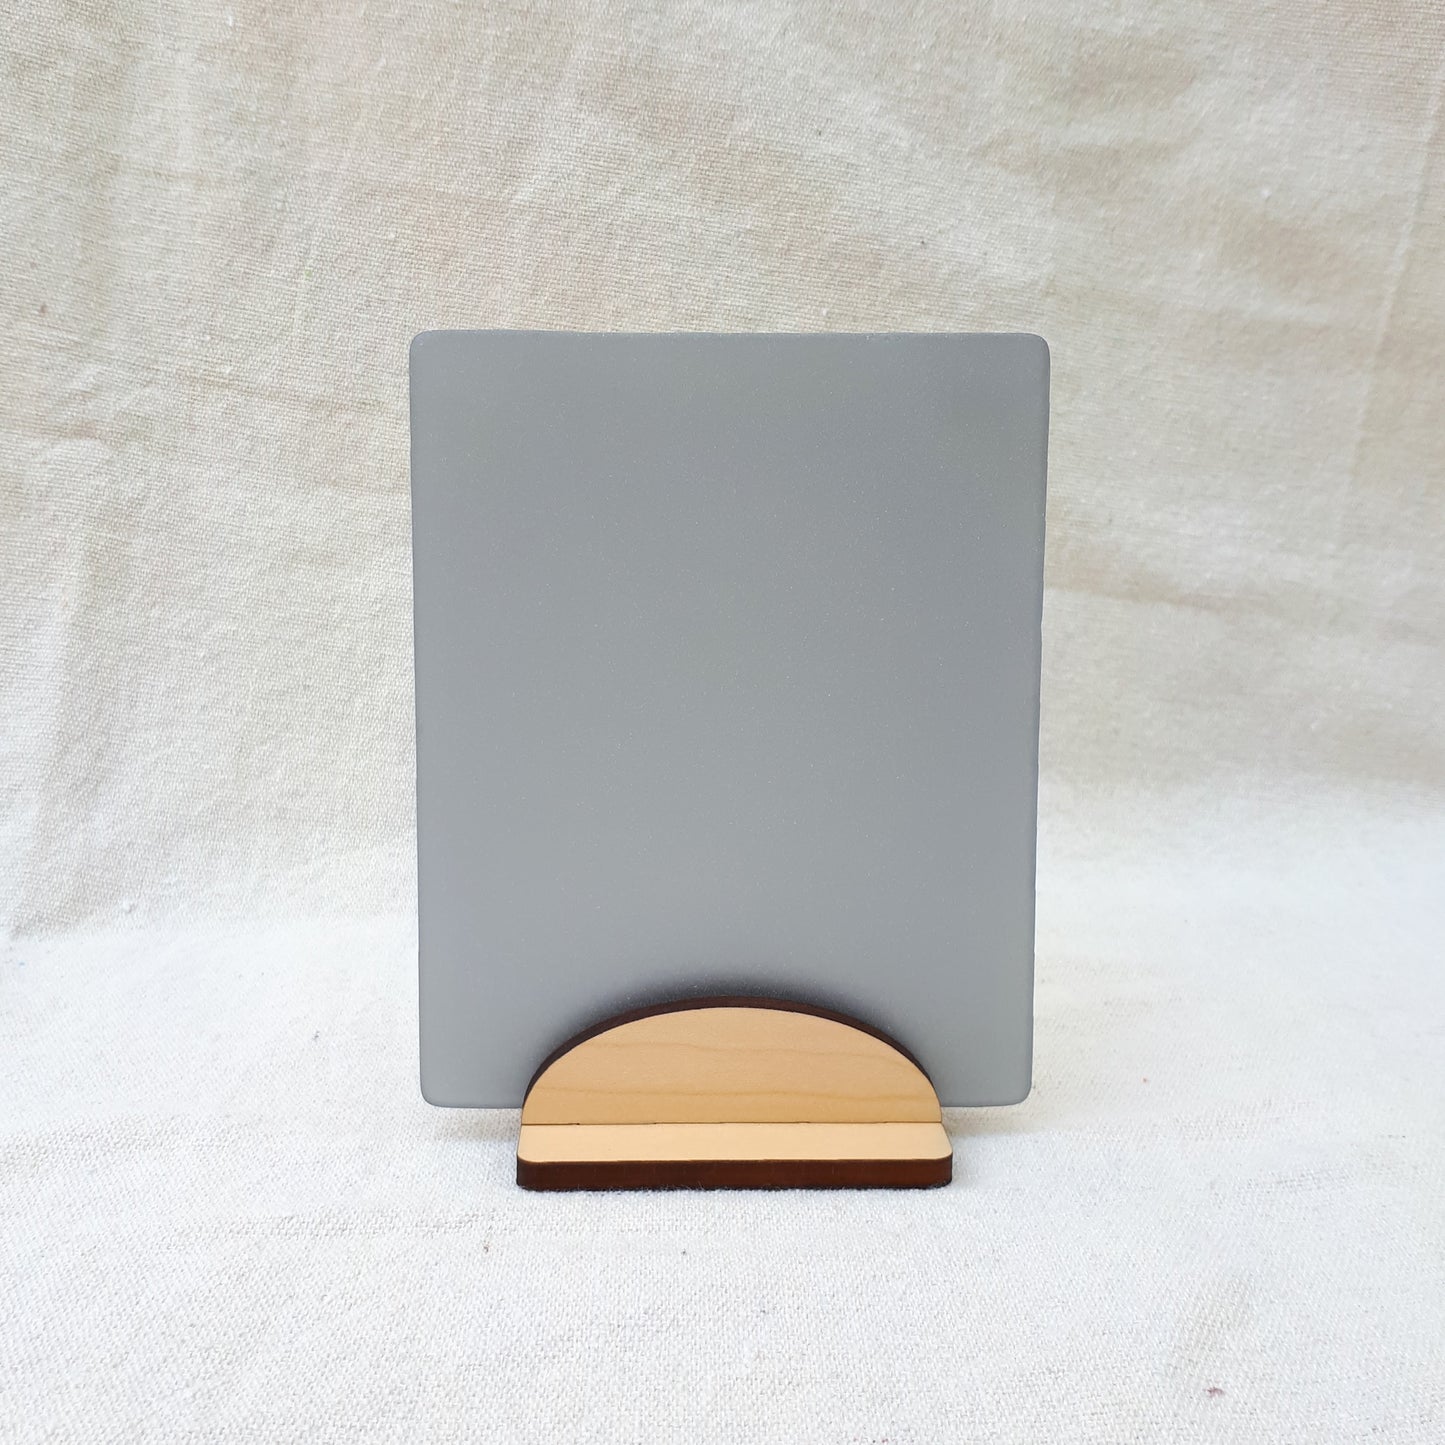 Grey sea glass sign blank - 5x4 inch tumble glass piece